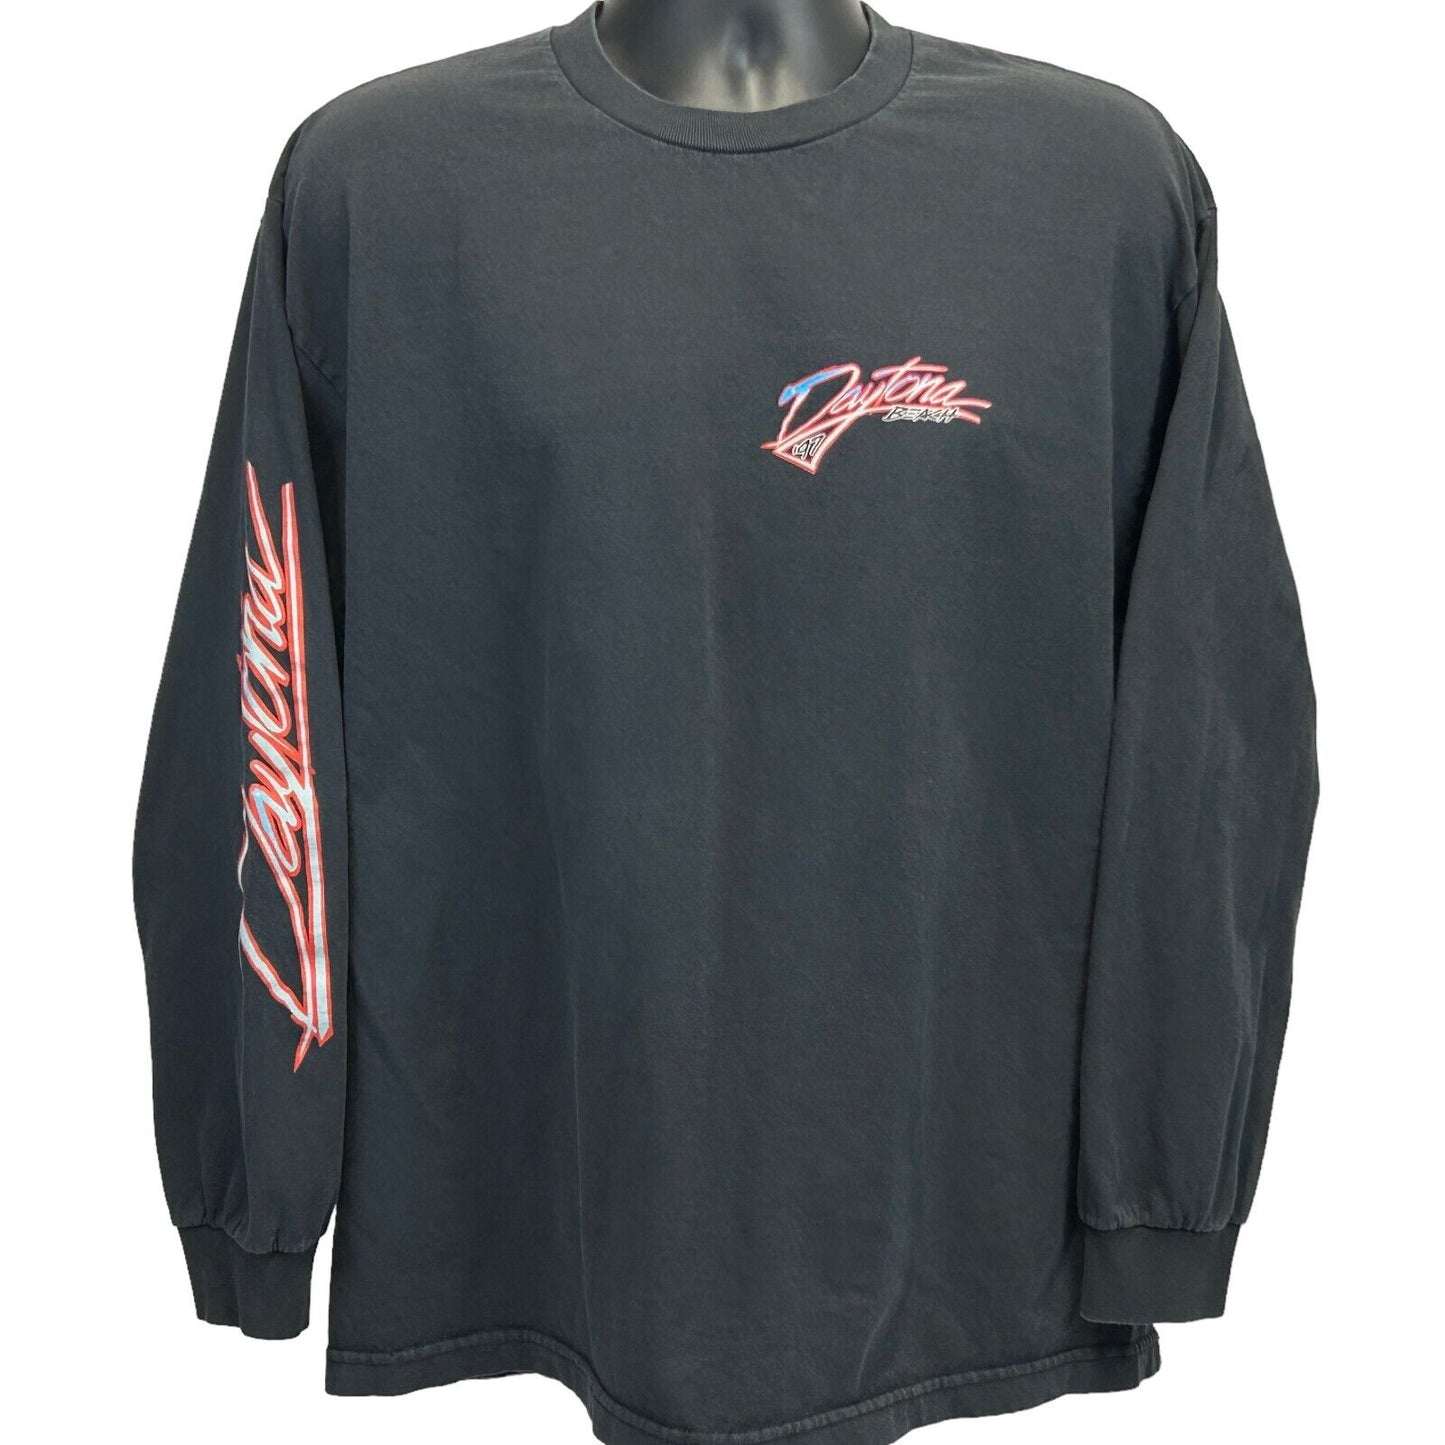 1997 Daytona Beach Motorcycle Race T Shirt X-Large J.Galt Made In USA Mens Black